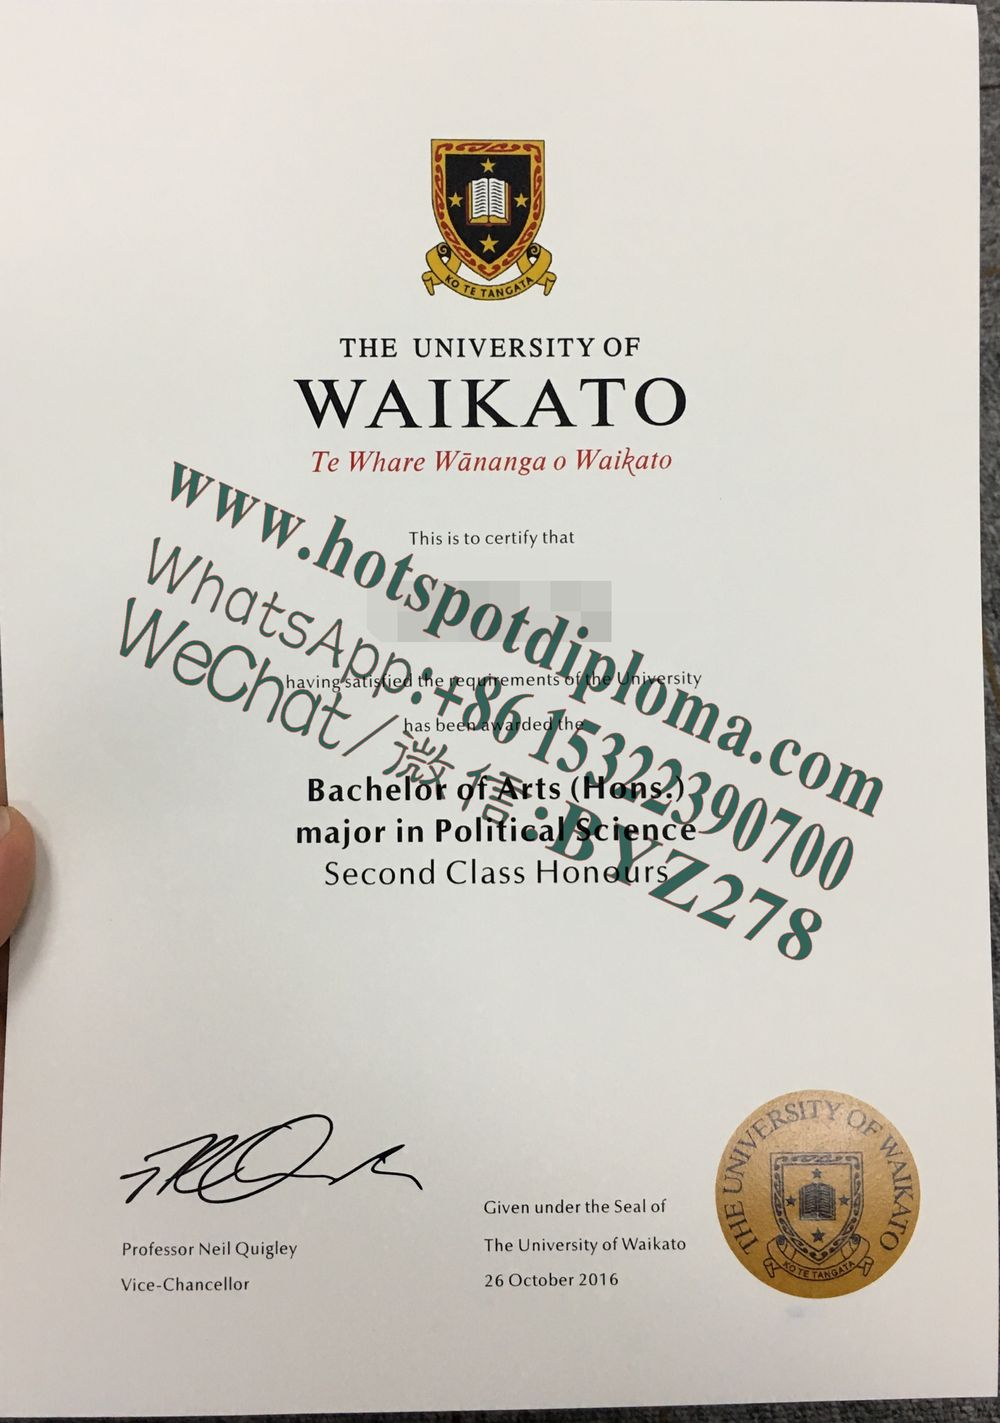 Buy University of Waikato diploma Online